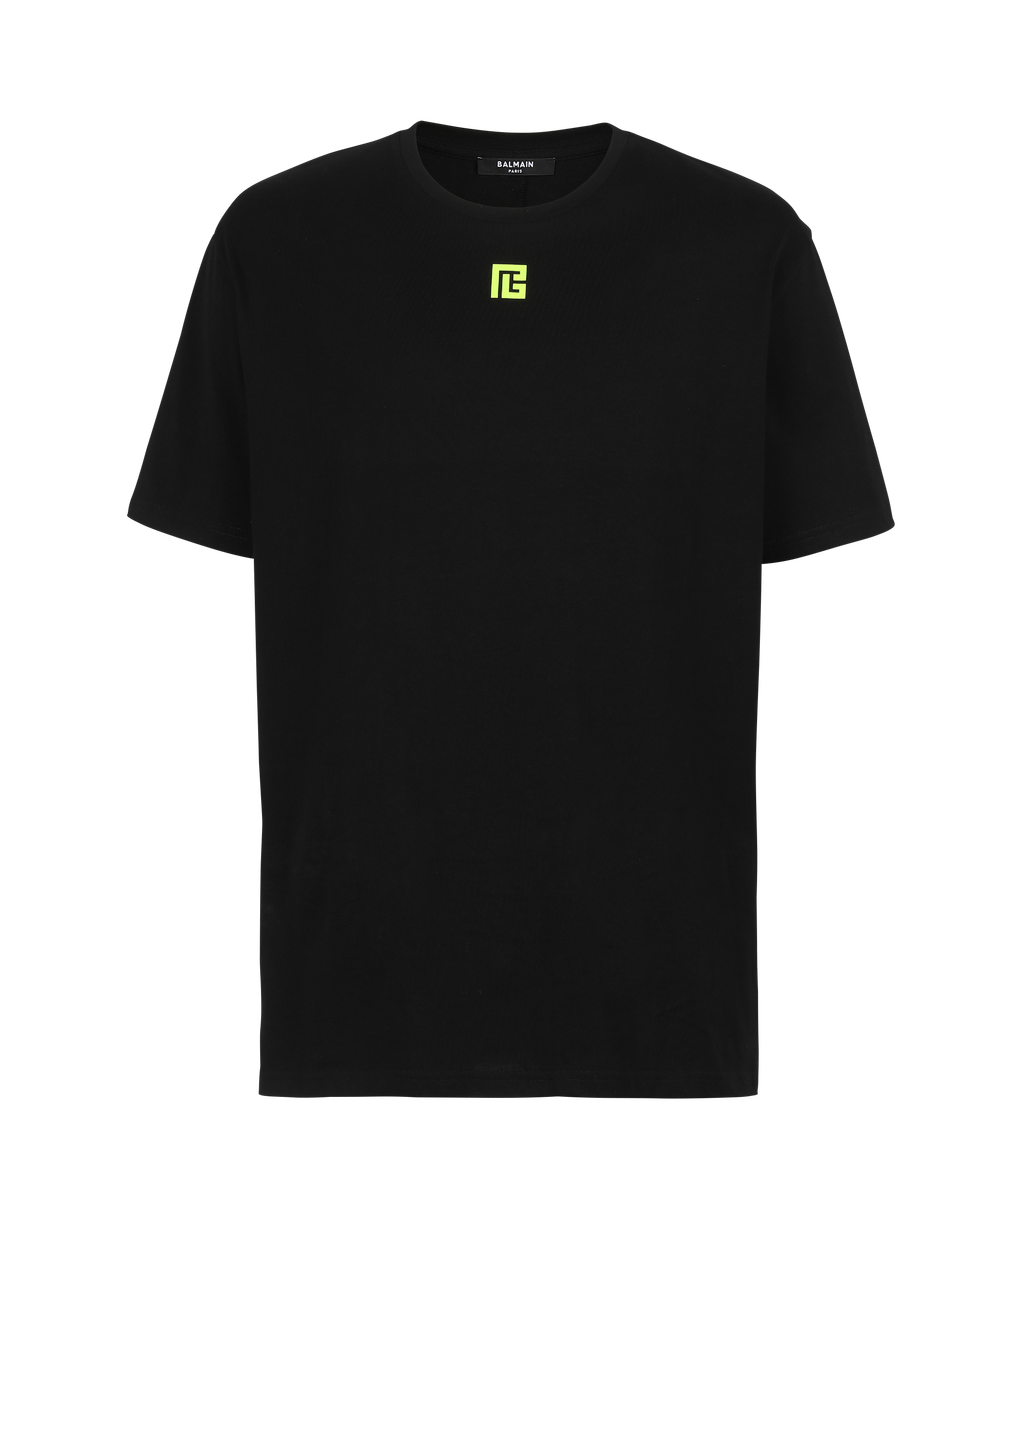 EXCLUSIVE - Cotton T-shirt with maxi Balmain logo print on back, black, hi-res